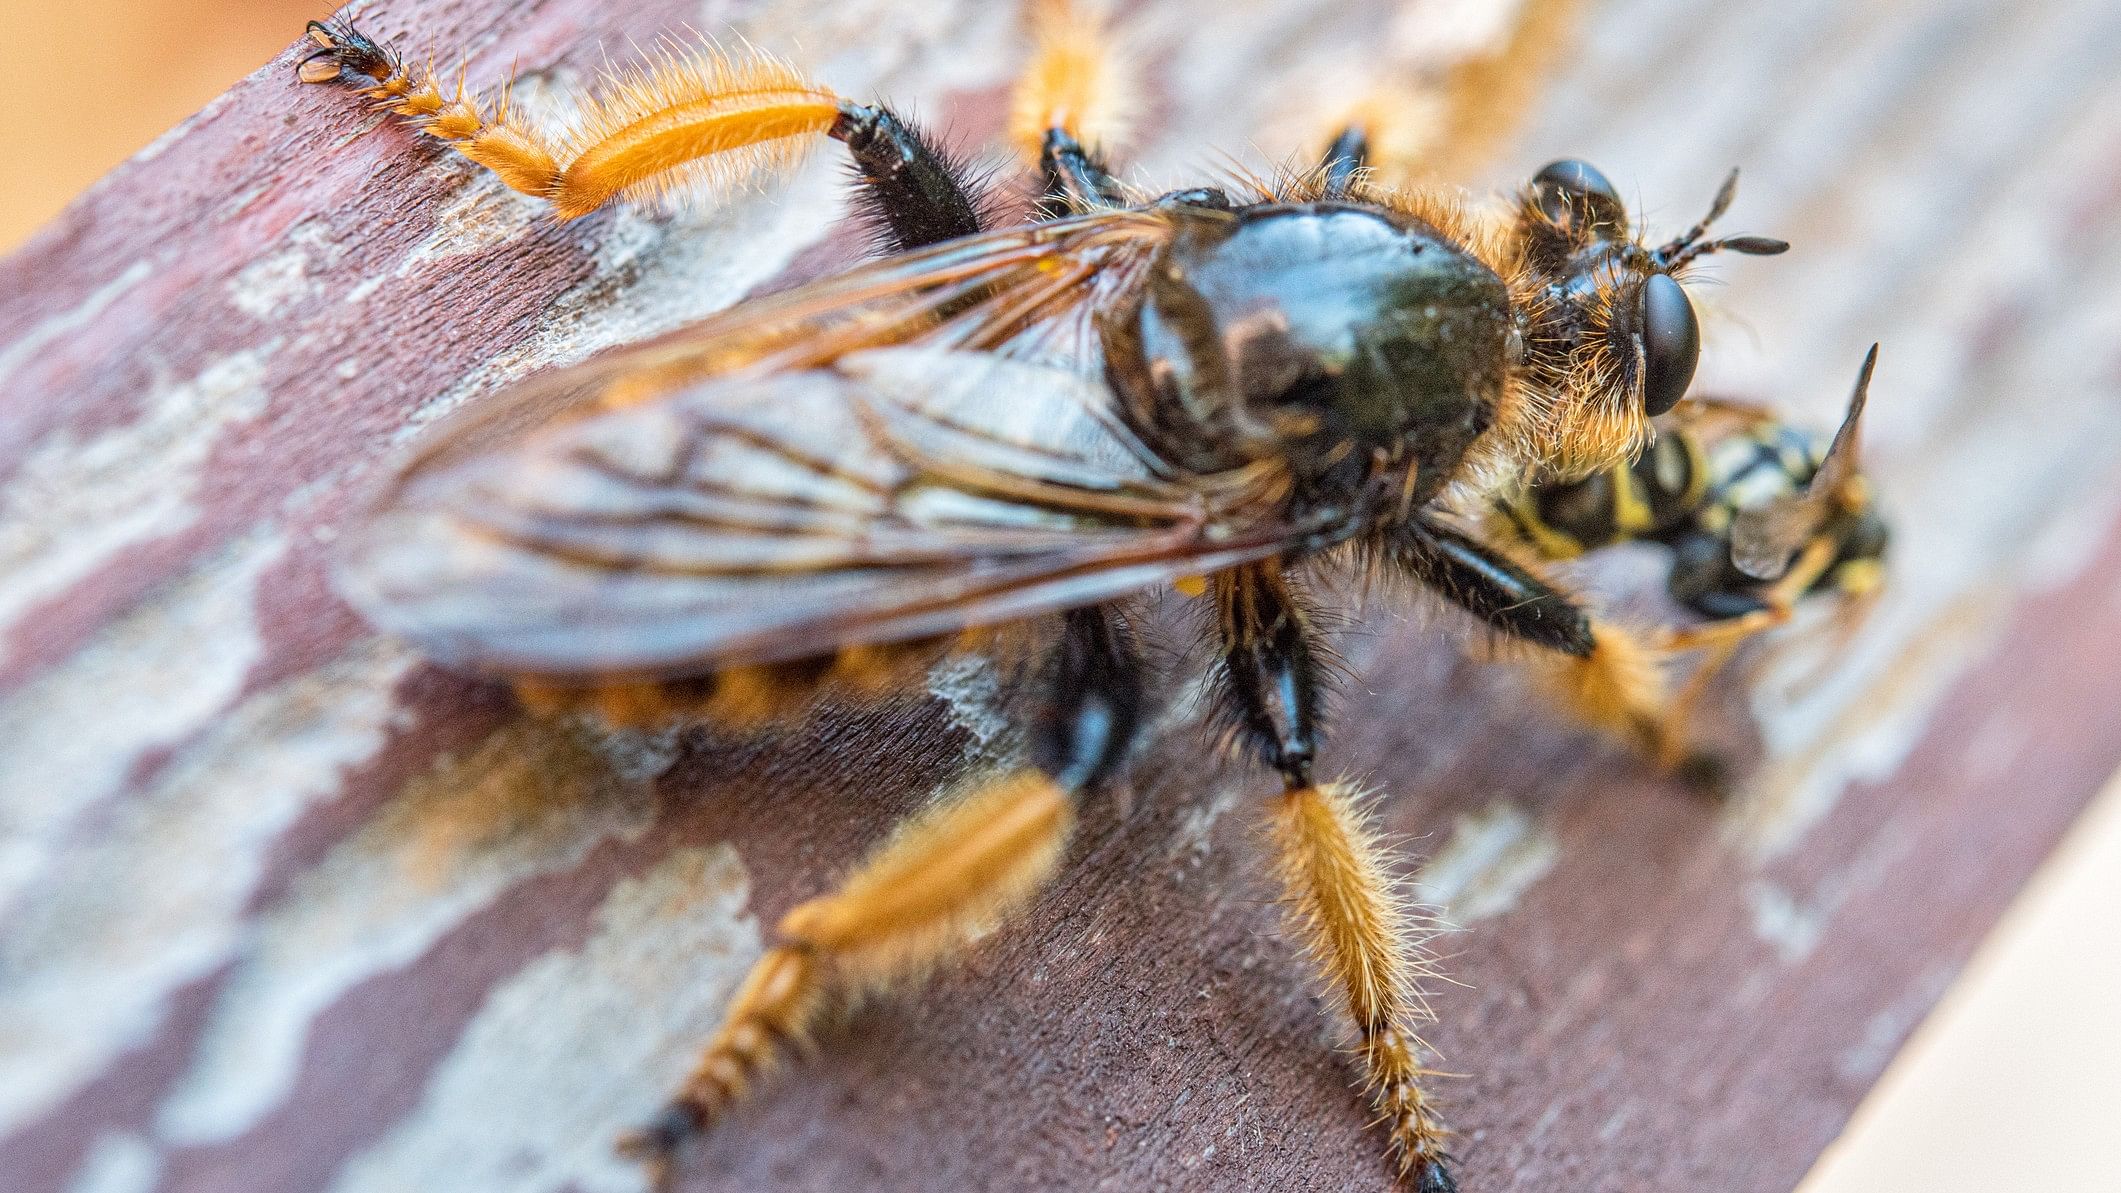 <div class="paragraphs"><p>Representative image showing hornet eating a wasp.</p></div>